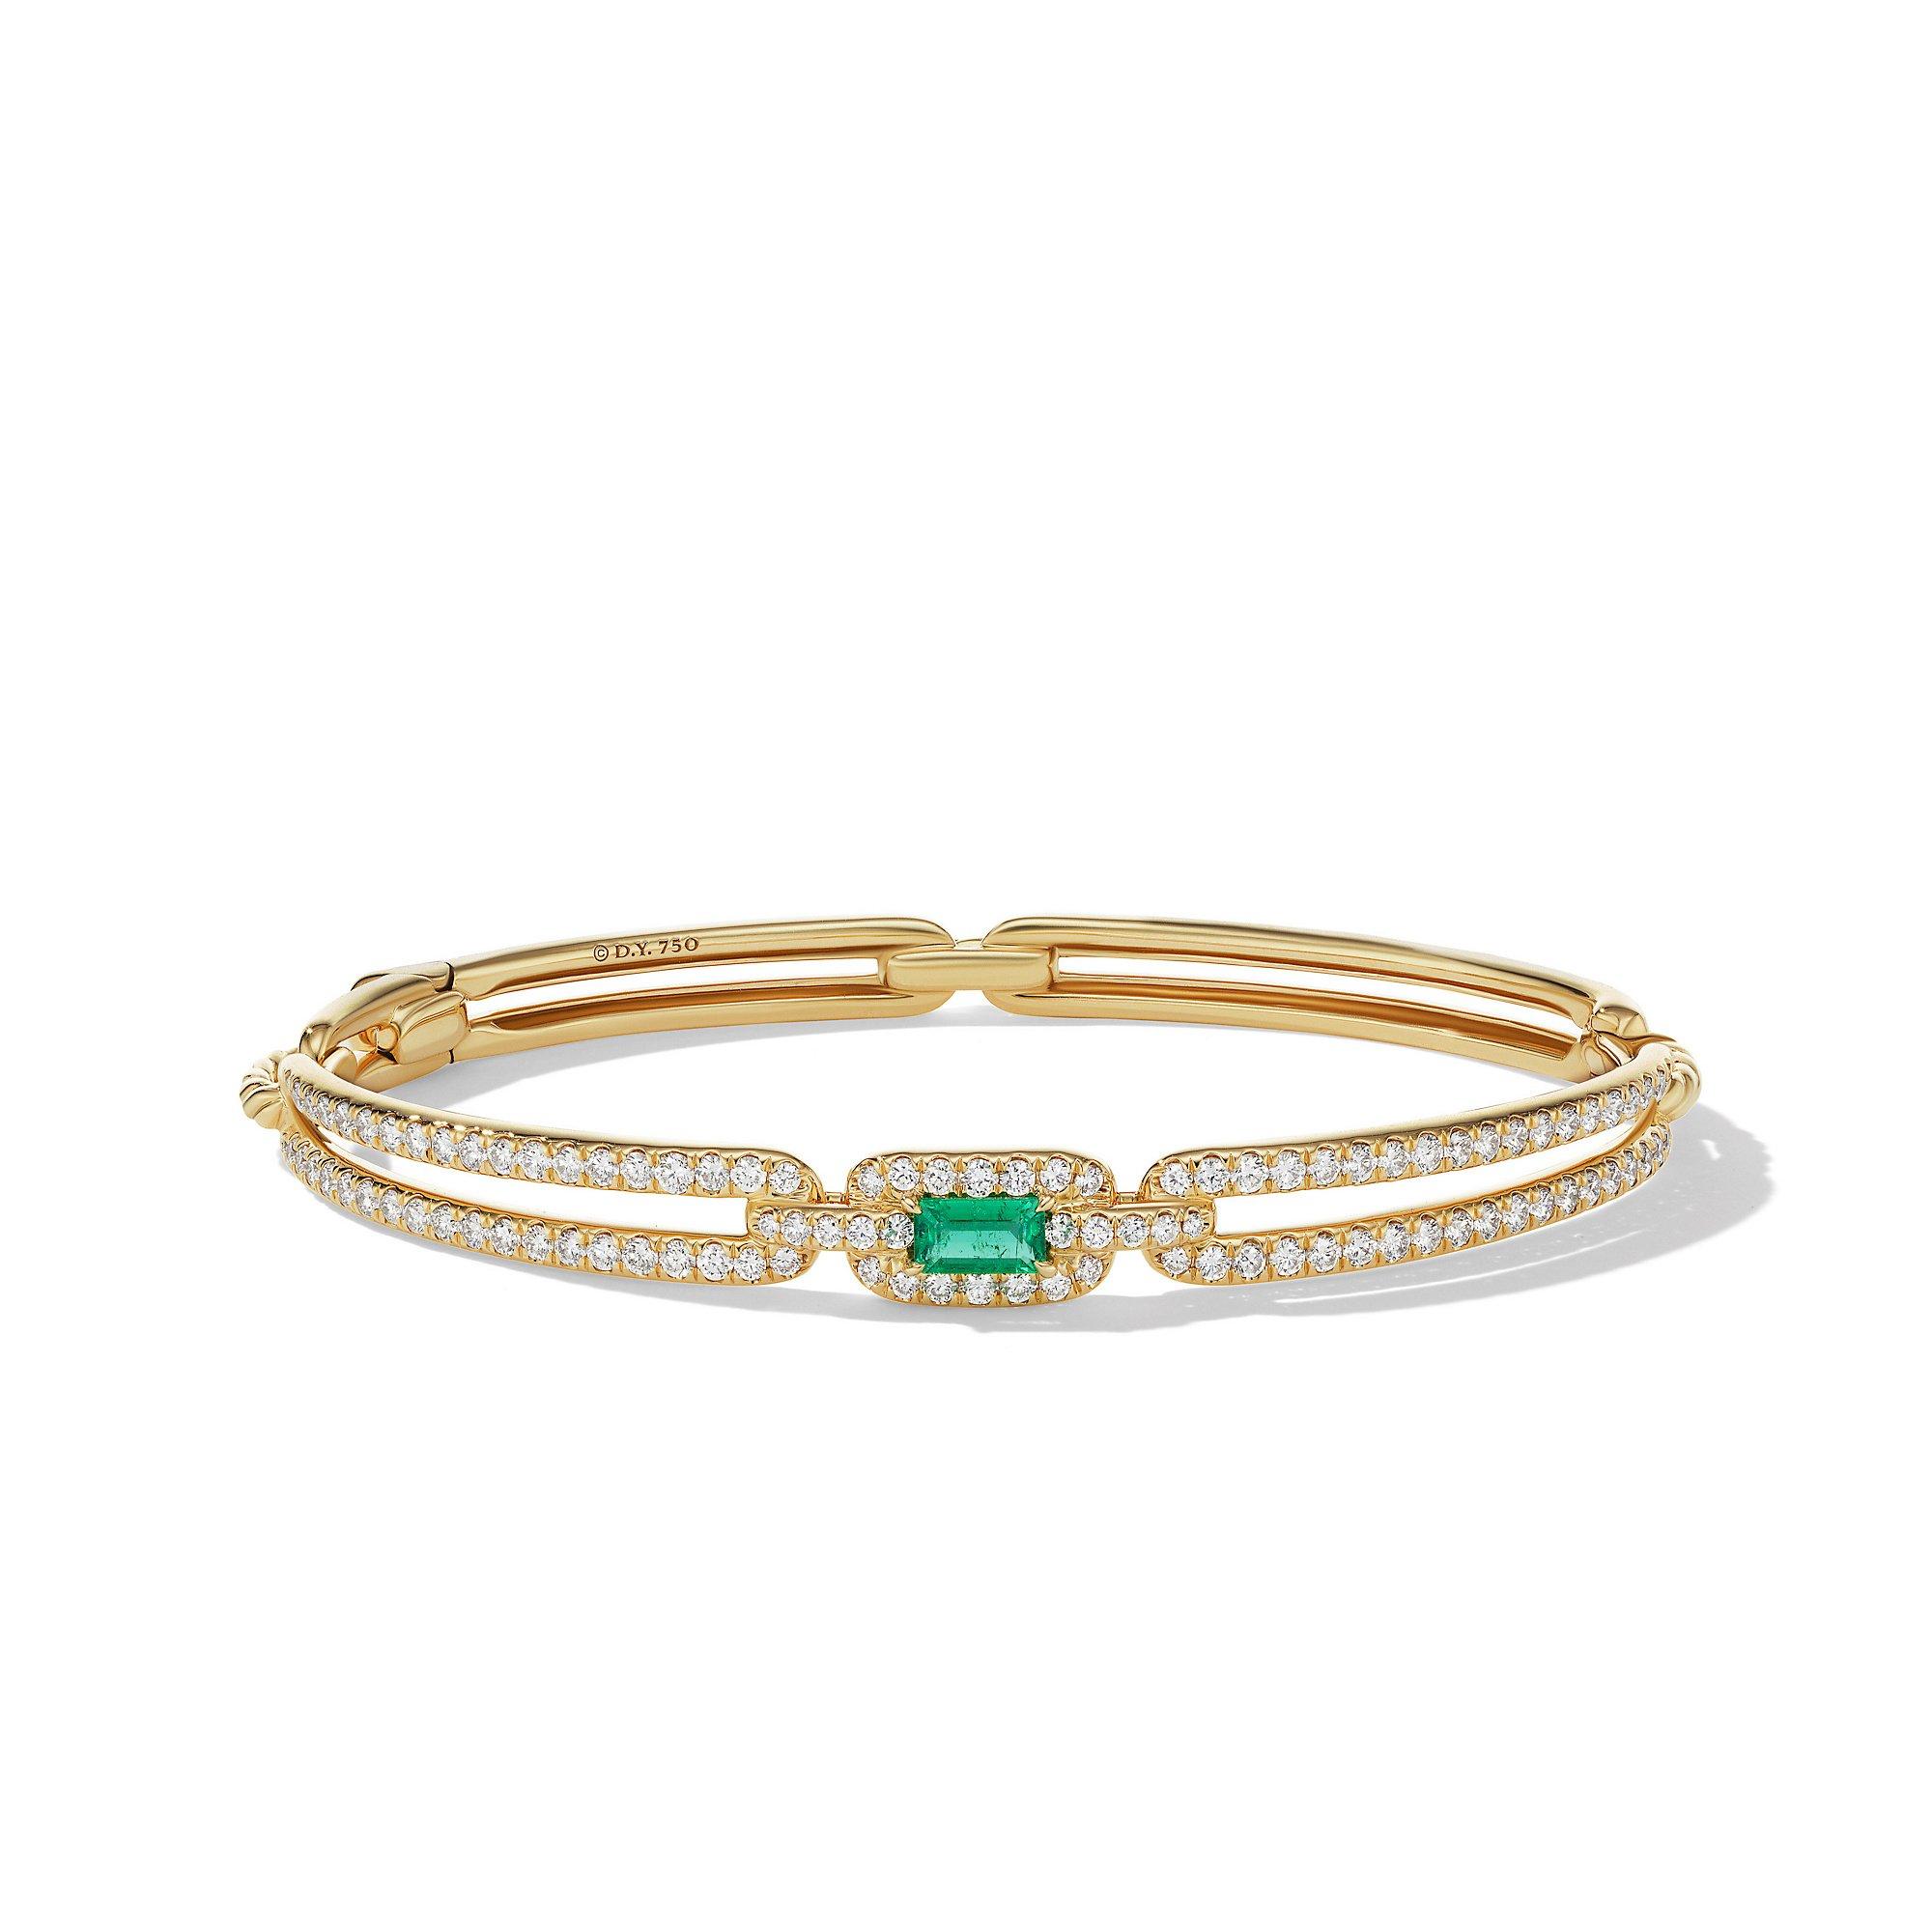 David Yurman Stax Single Link Bracelet in 18K Yellow Gold with Emerald and Pav? Diamonds